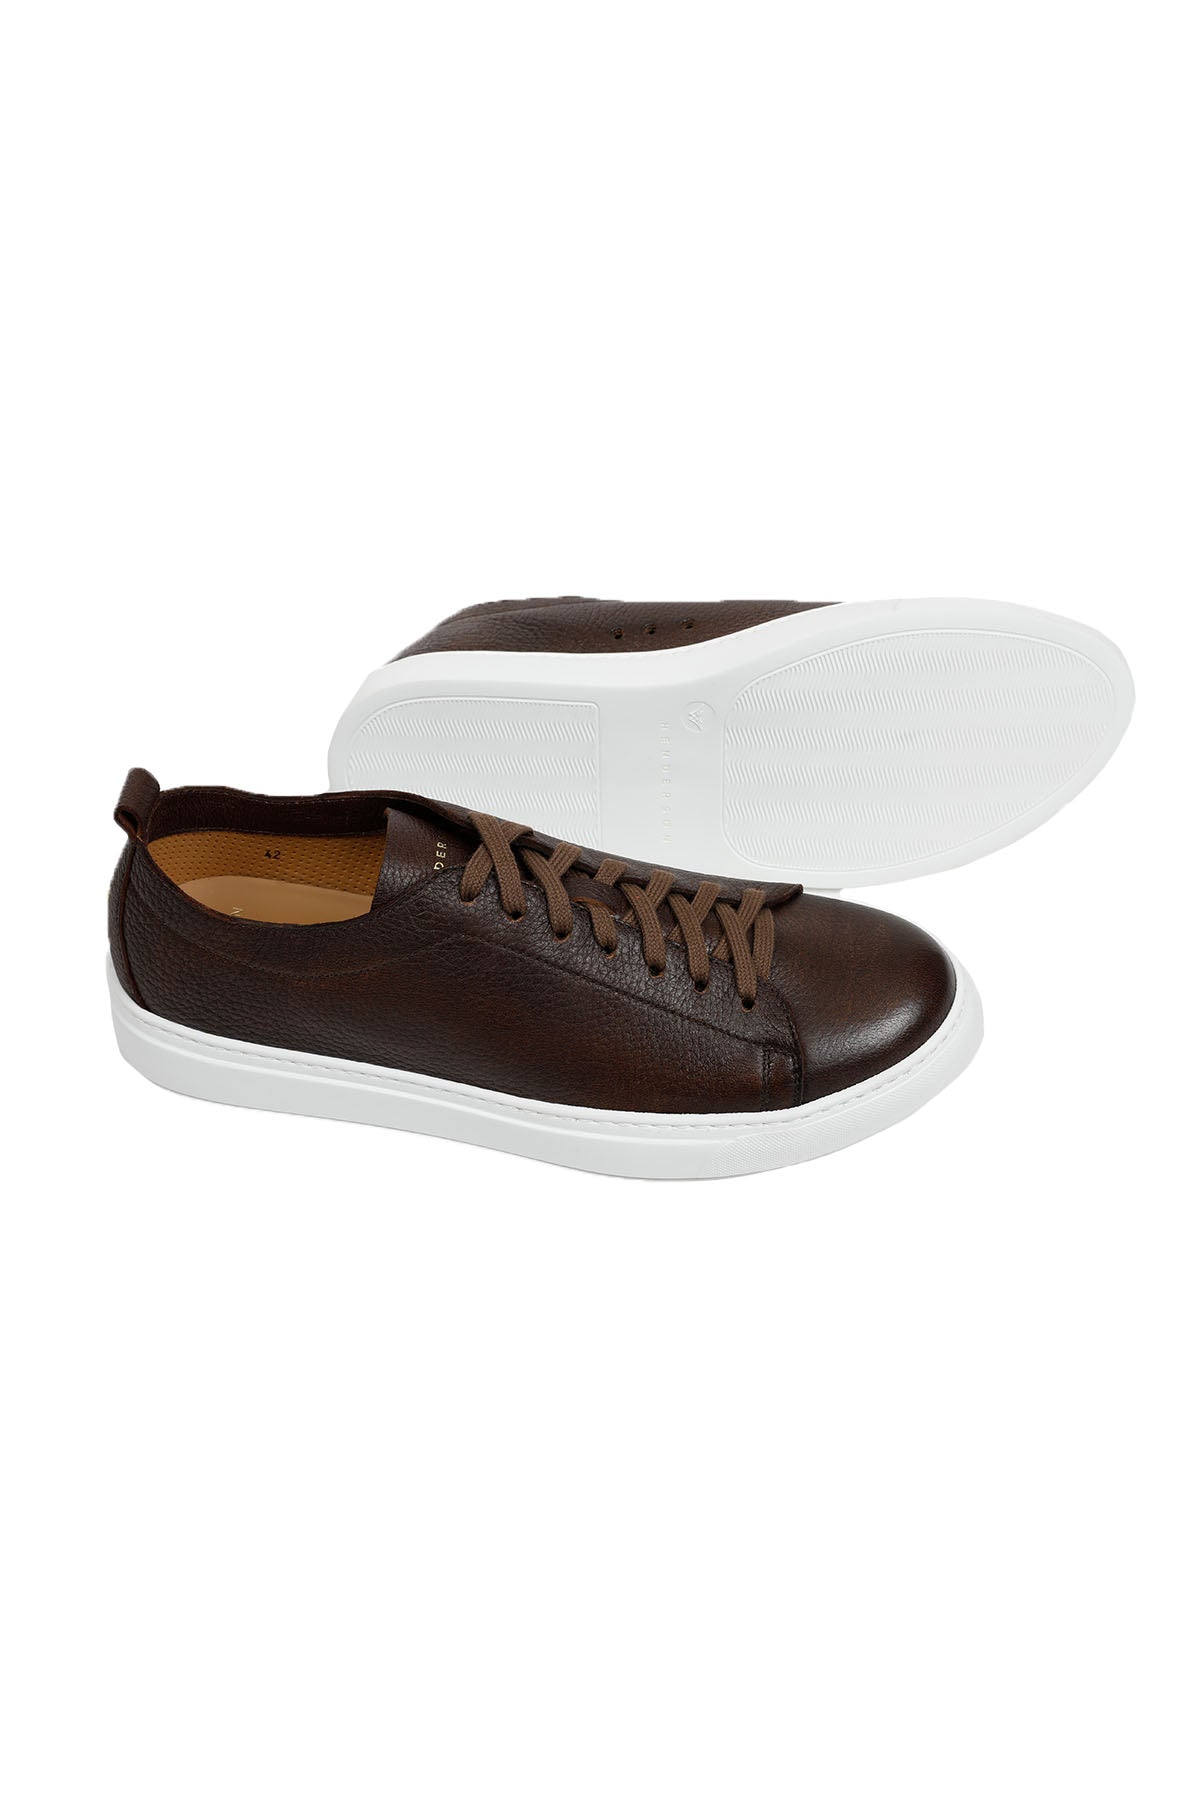 Henderson Bryan Yumuşak Deri Sneaker Ayakkabı-Libas Trendy Fashion Store